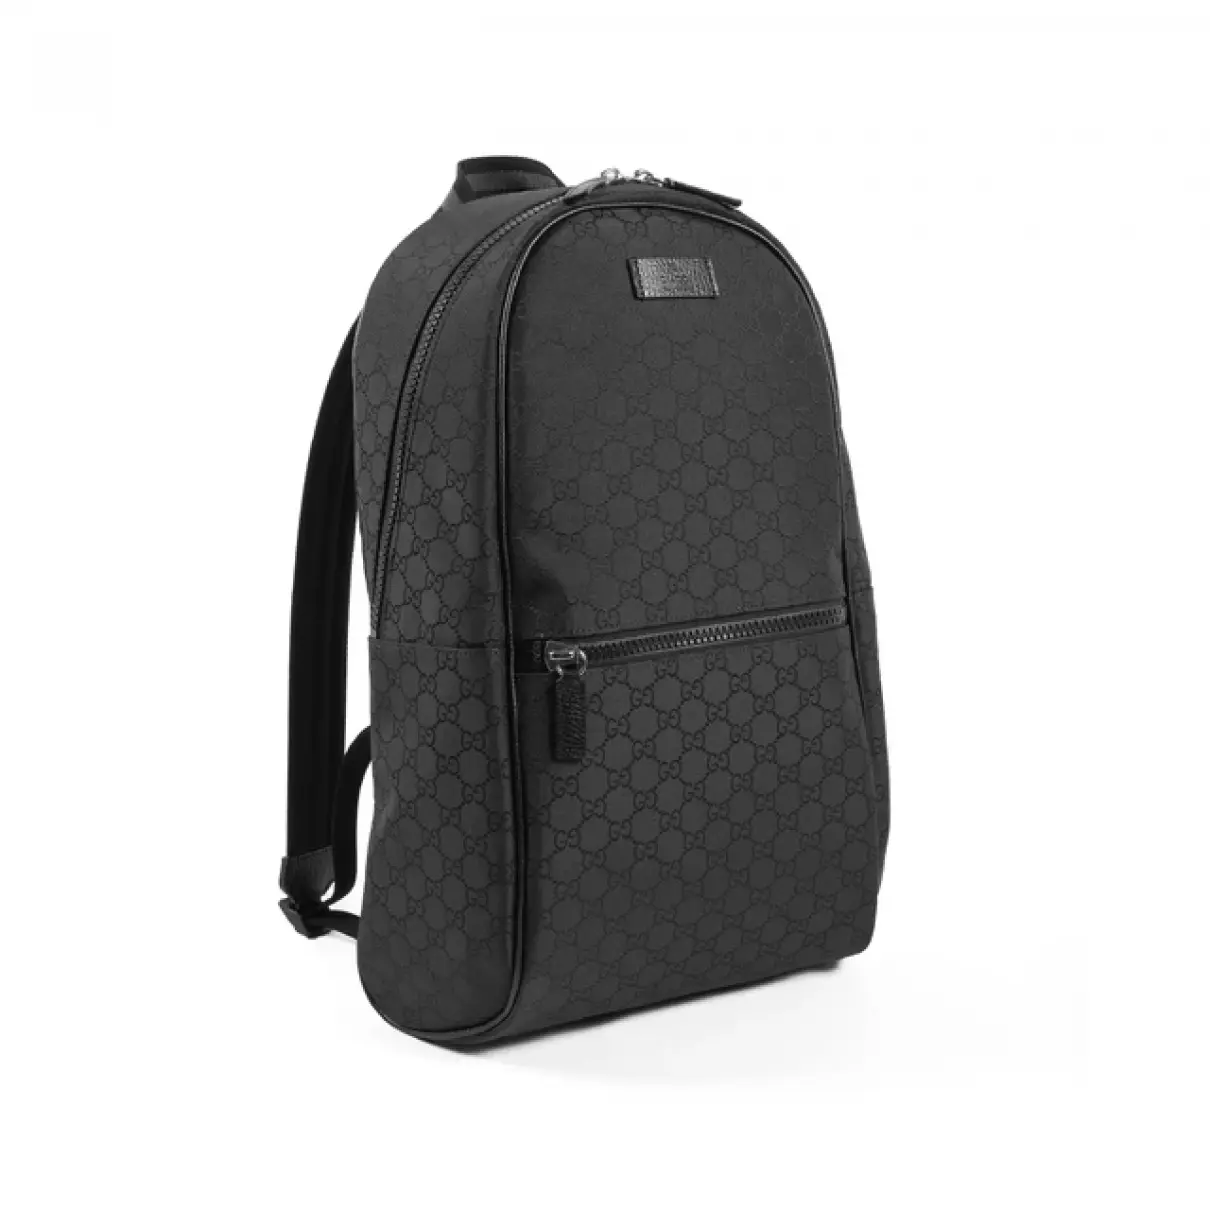 Backpack Gucci